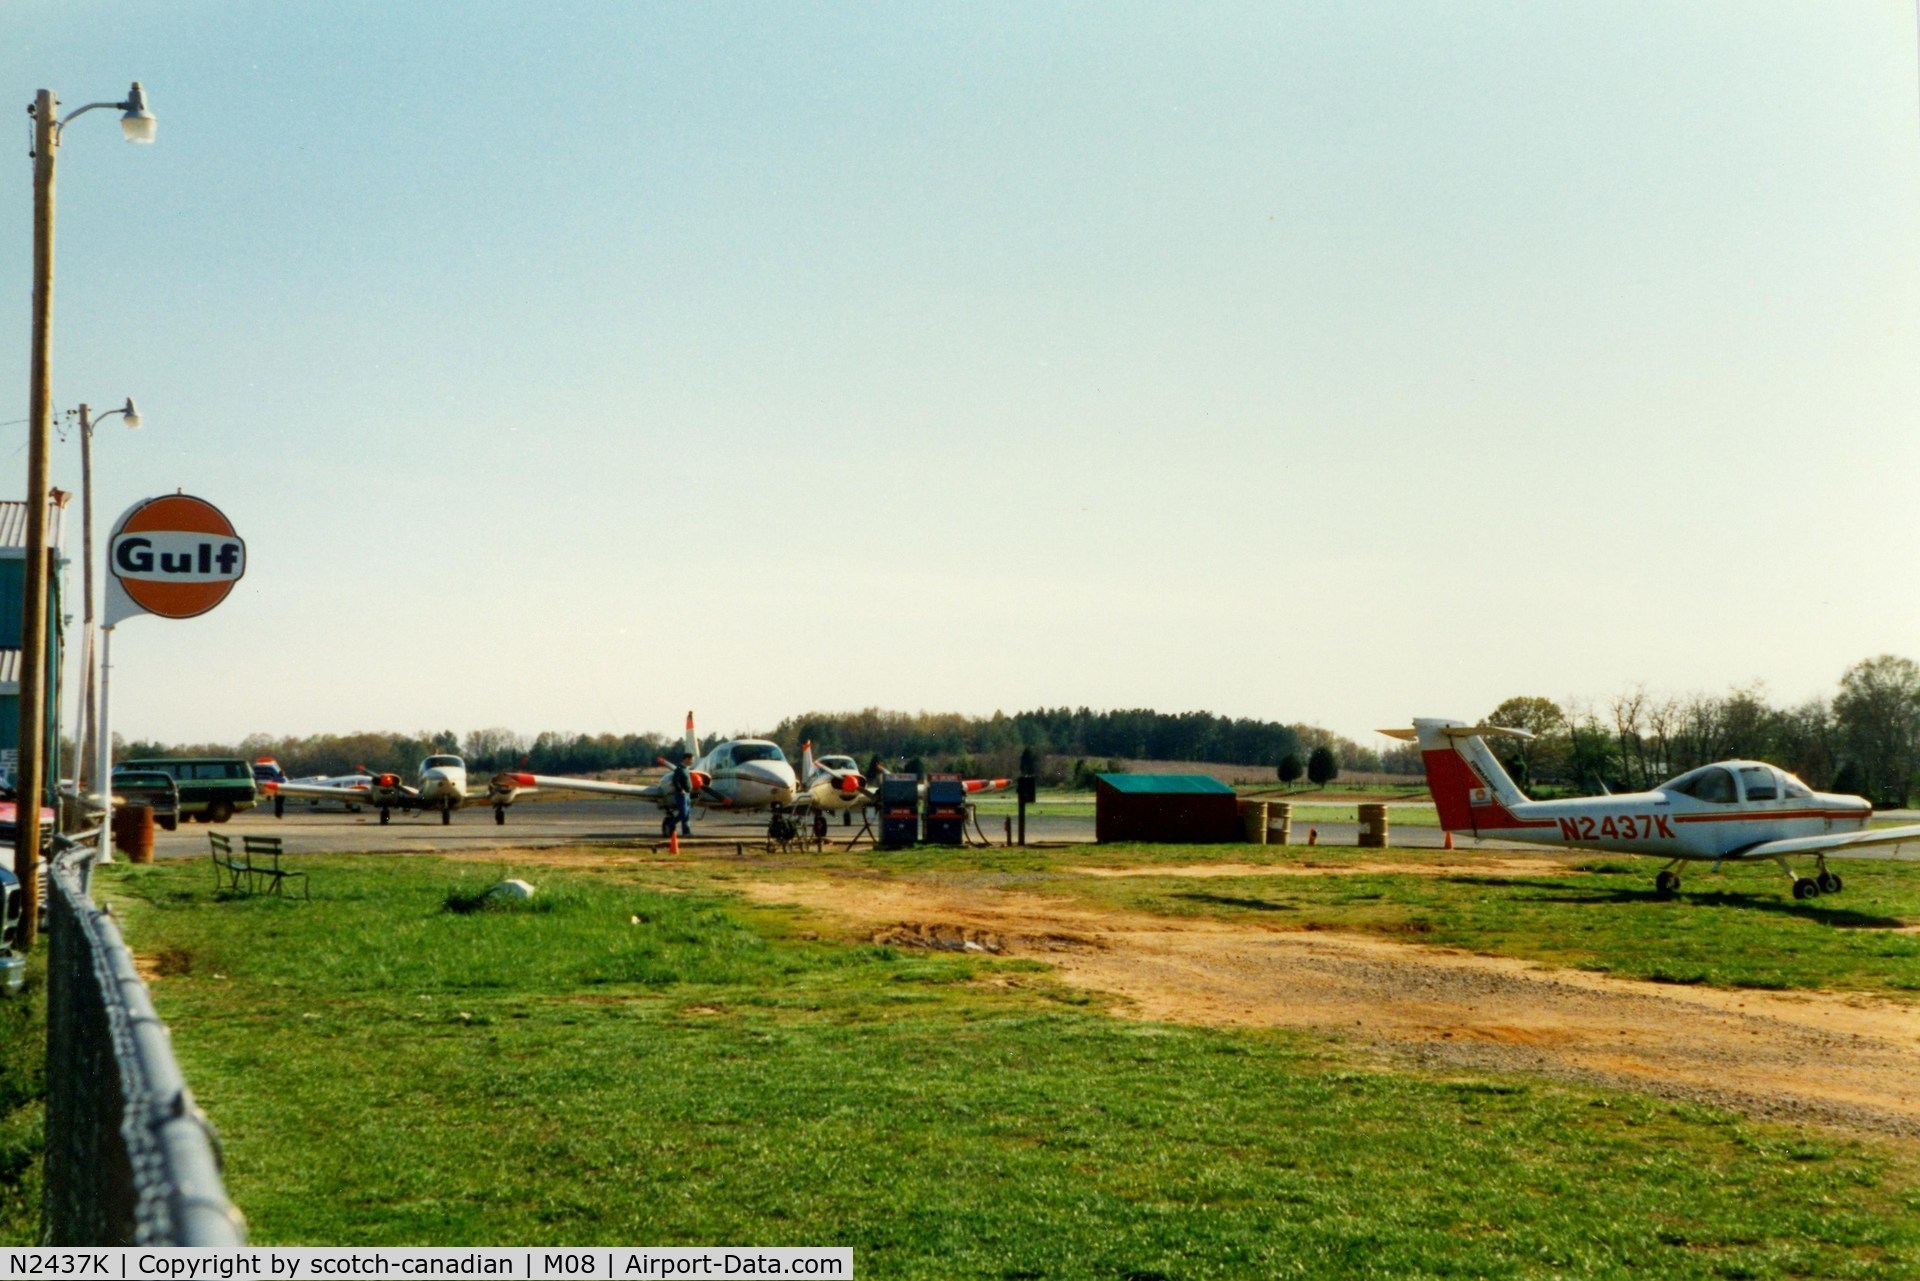 N2437K, 1979 Piper PA-38-112 Tomahawk C/N 38-79A0634, 1979 Piper PA-38-112 N2437K at Bolivar Aviation, William L. Whitehurst Field, Bolivar, TN - April 1989